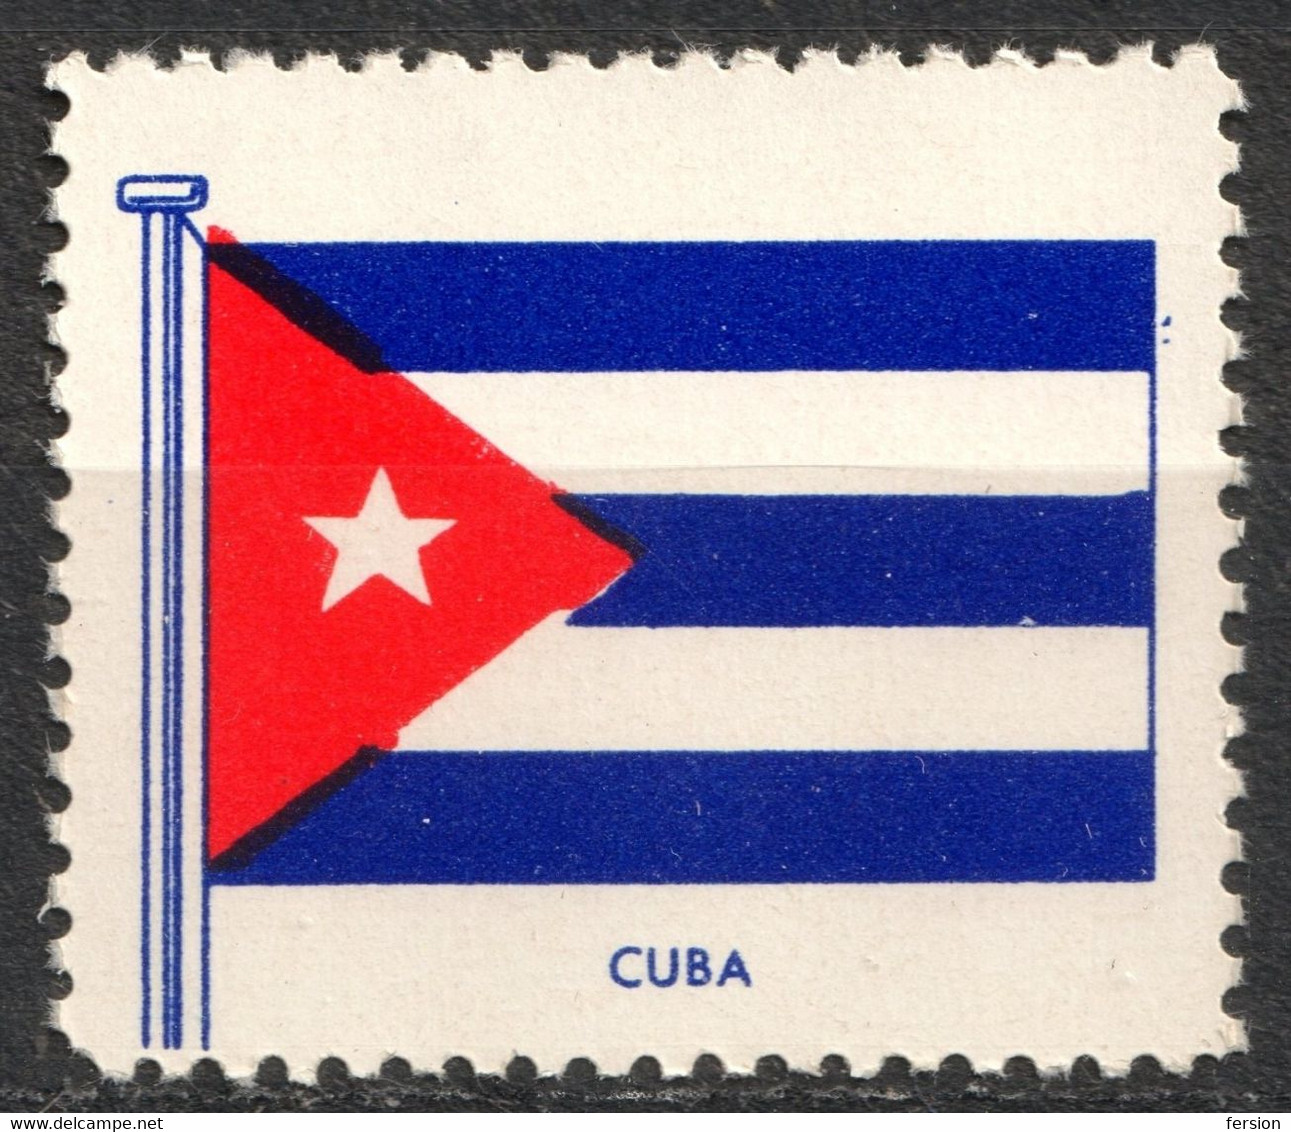 CUBA KUBA - FLAG FLAGS Cinderella Label Vignette 1957 USA Henry Ellis Harris Philately Boston 1957 - Charity Issues